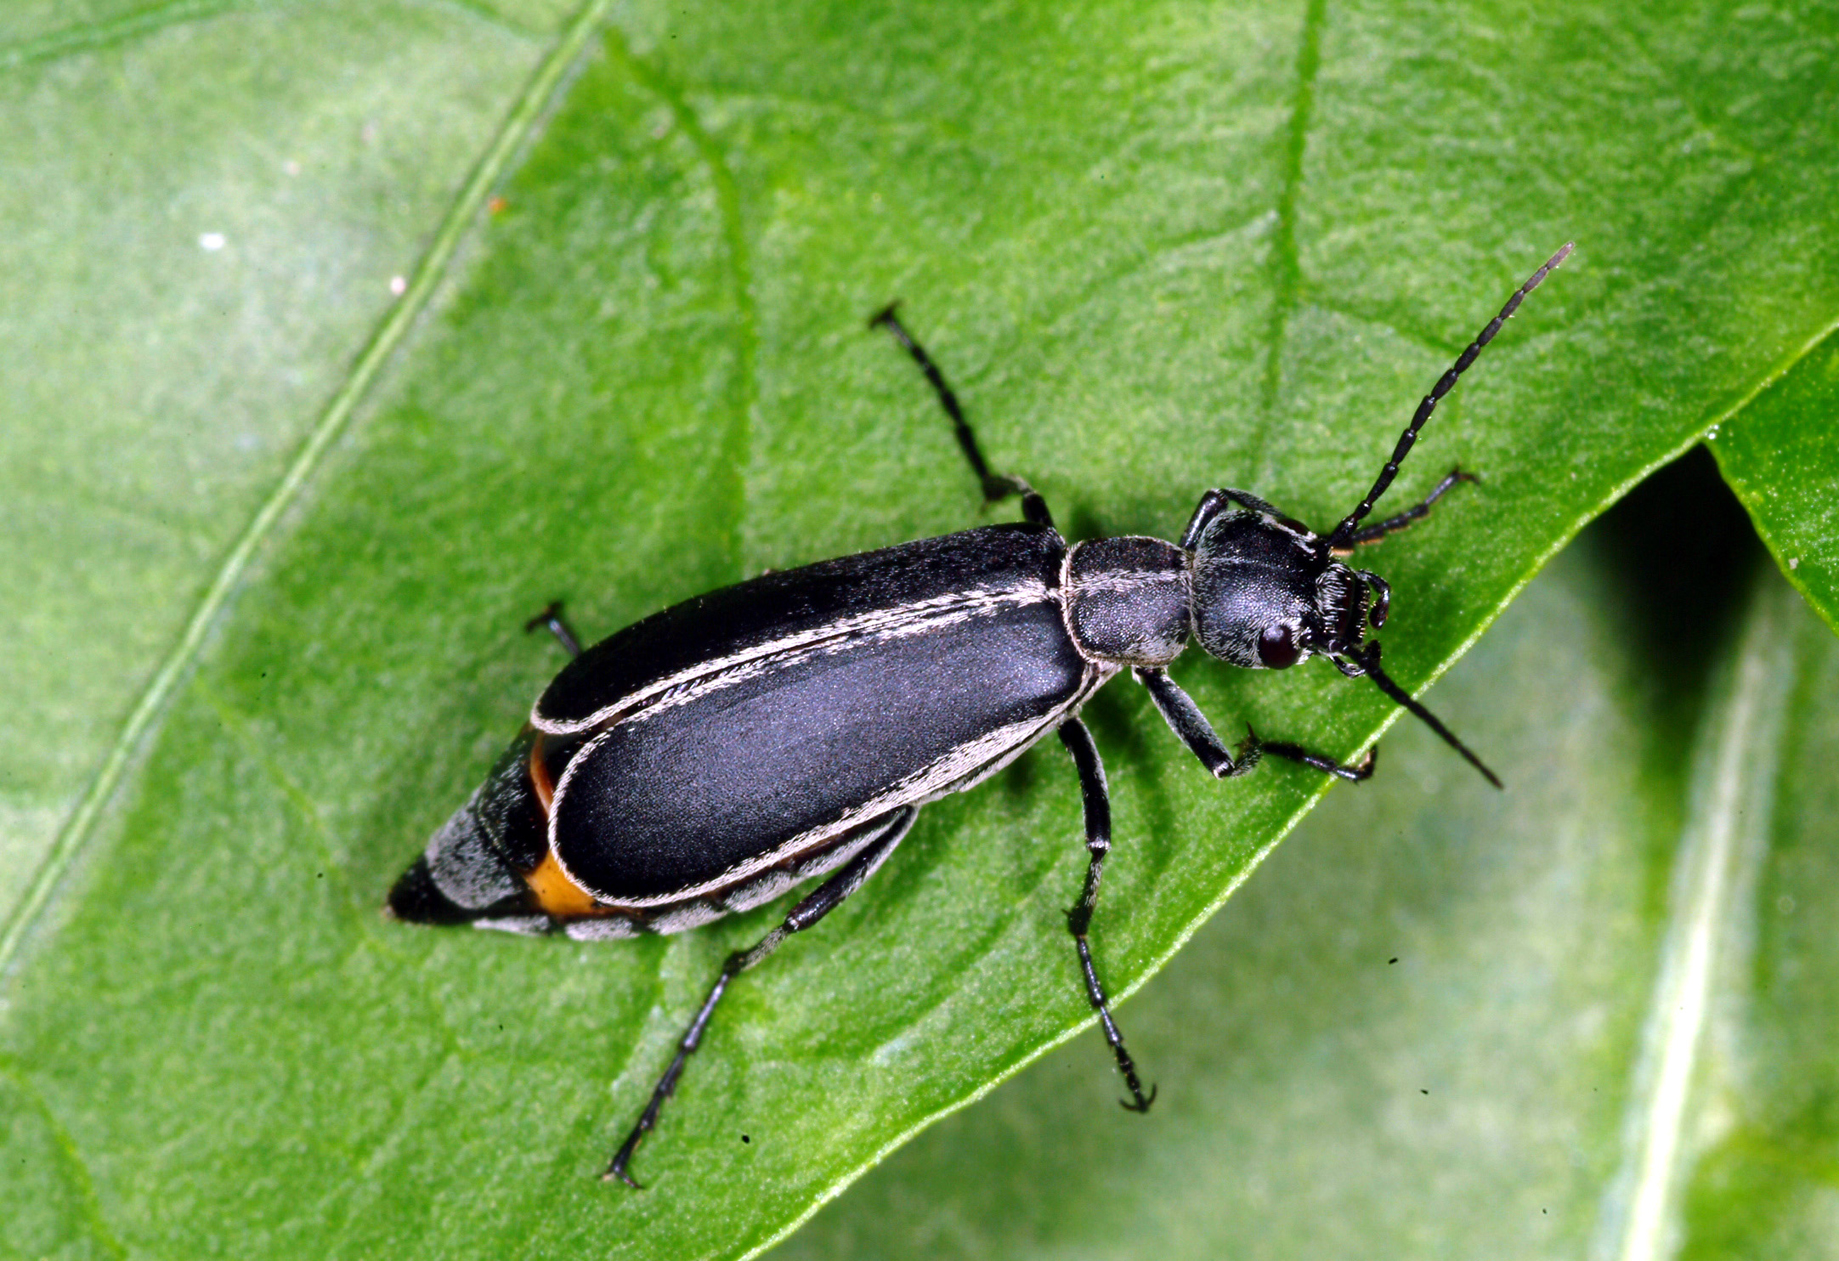 Margined blister beetle.